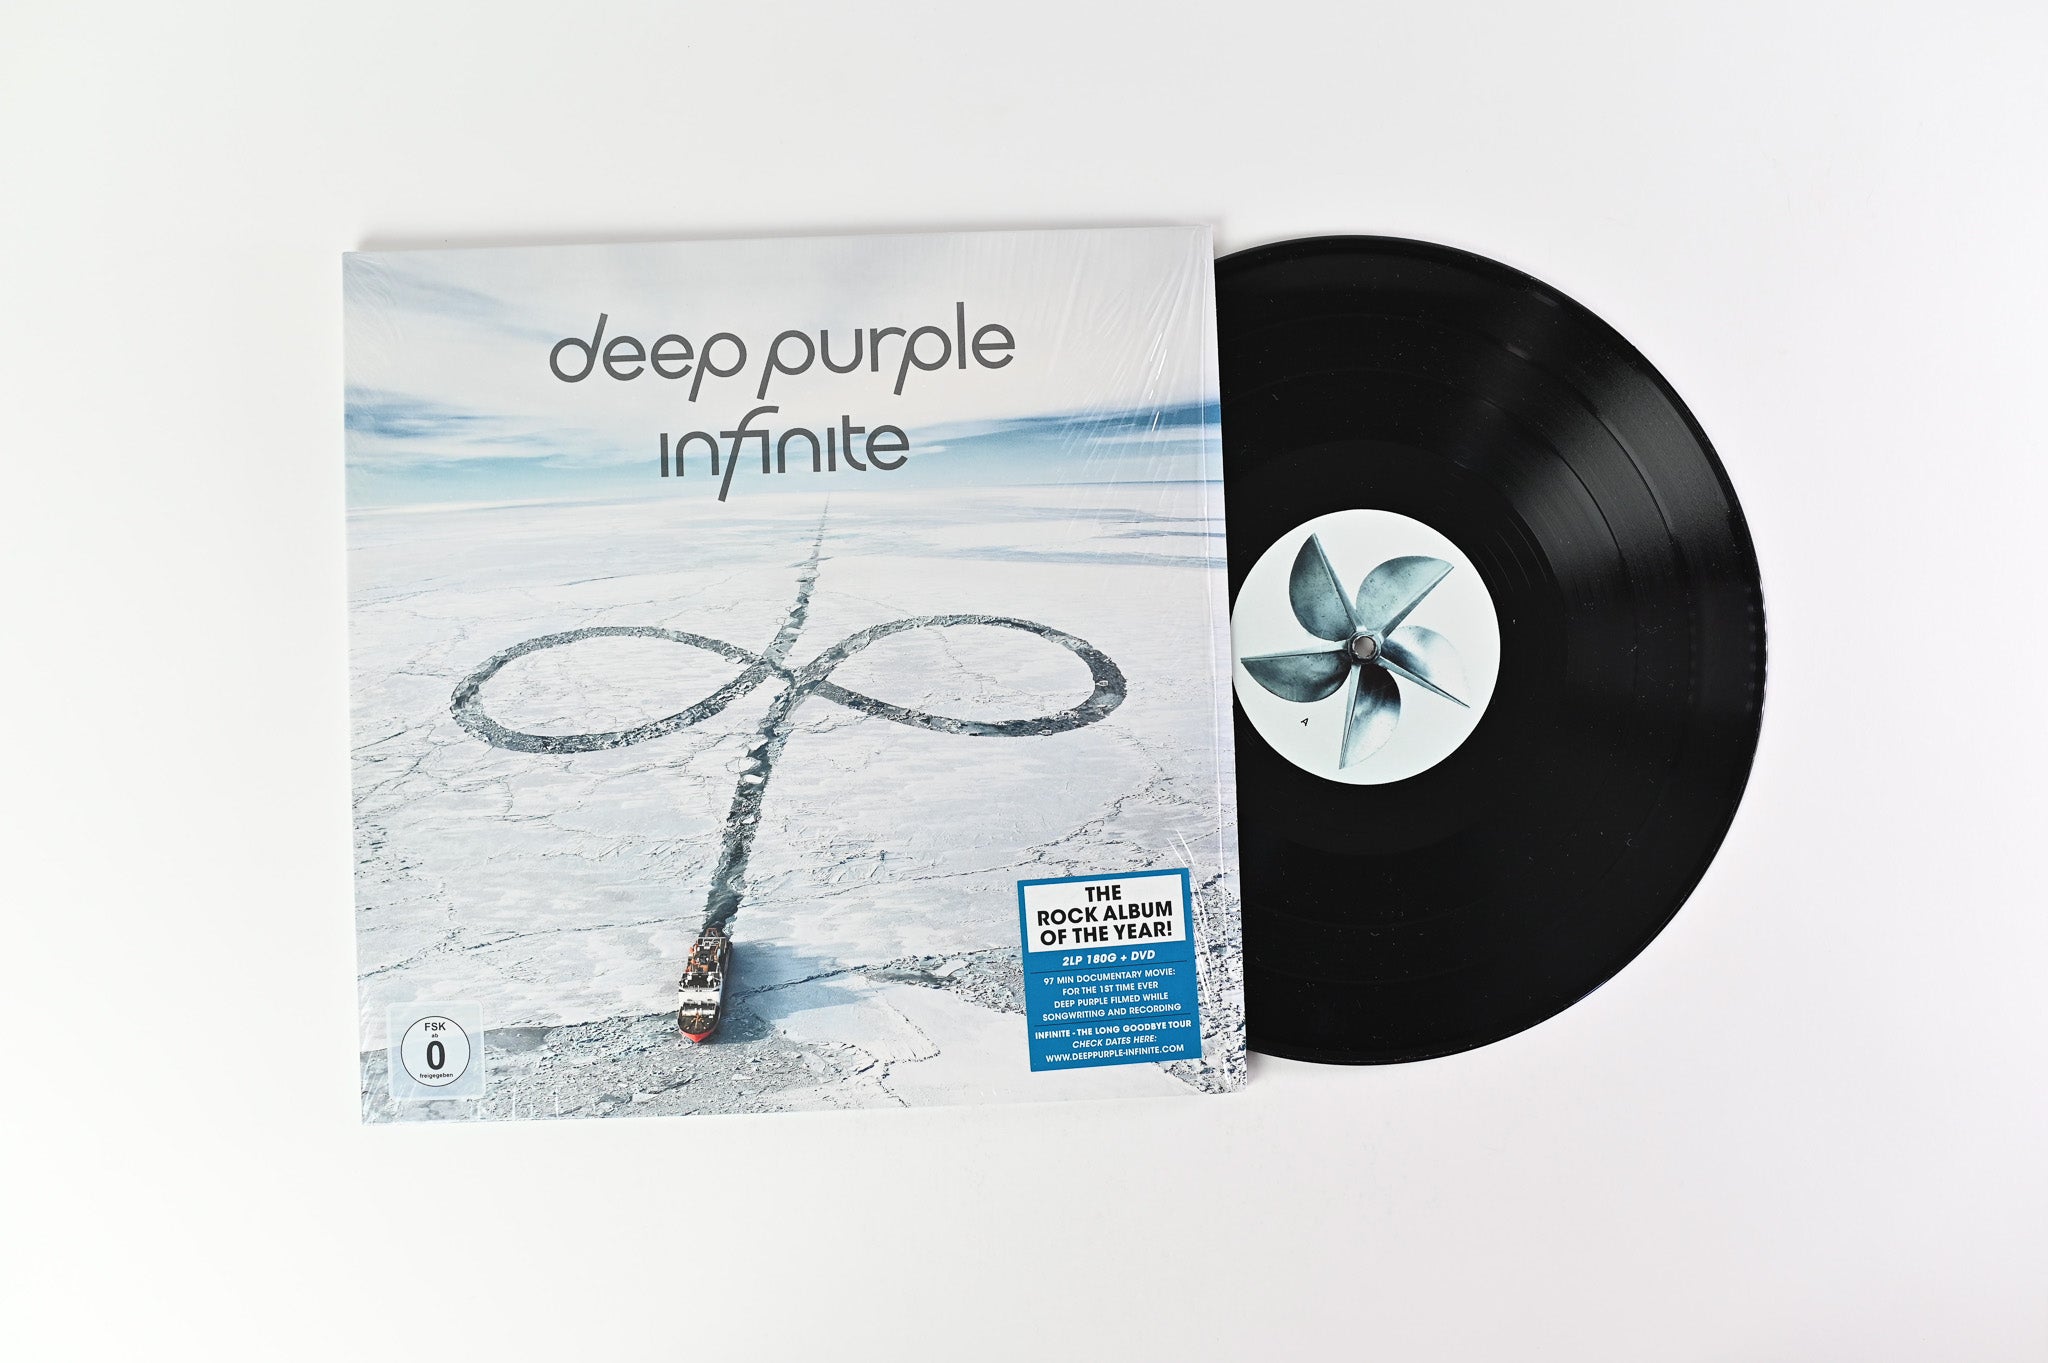 Deep Purple - Infinite on Ear Music